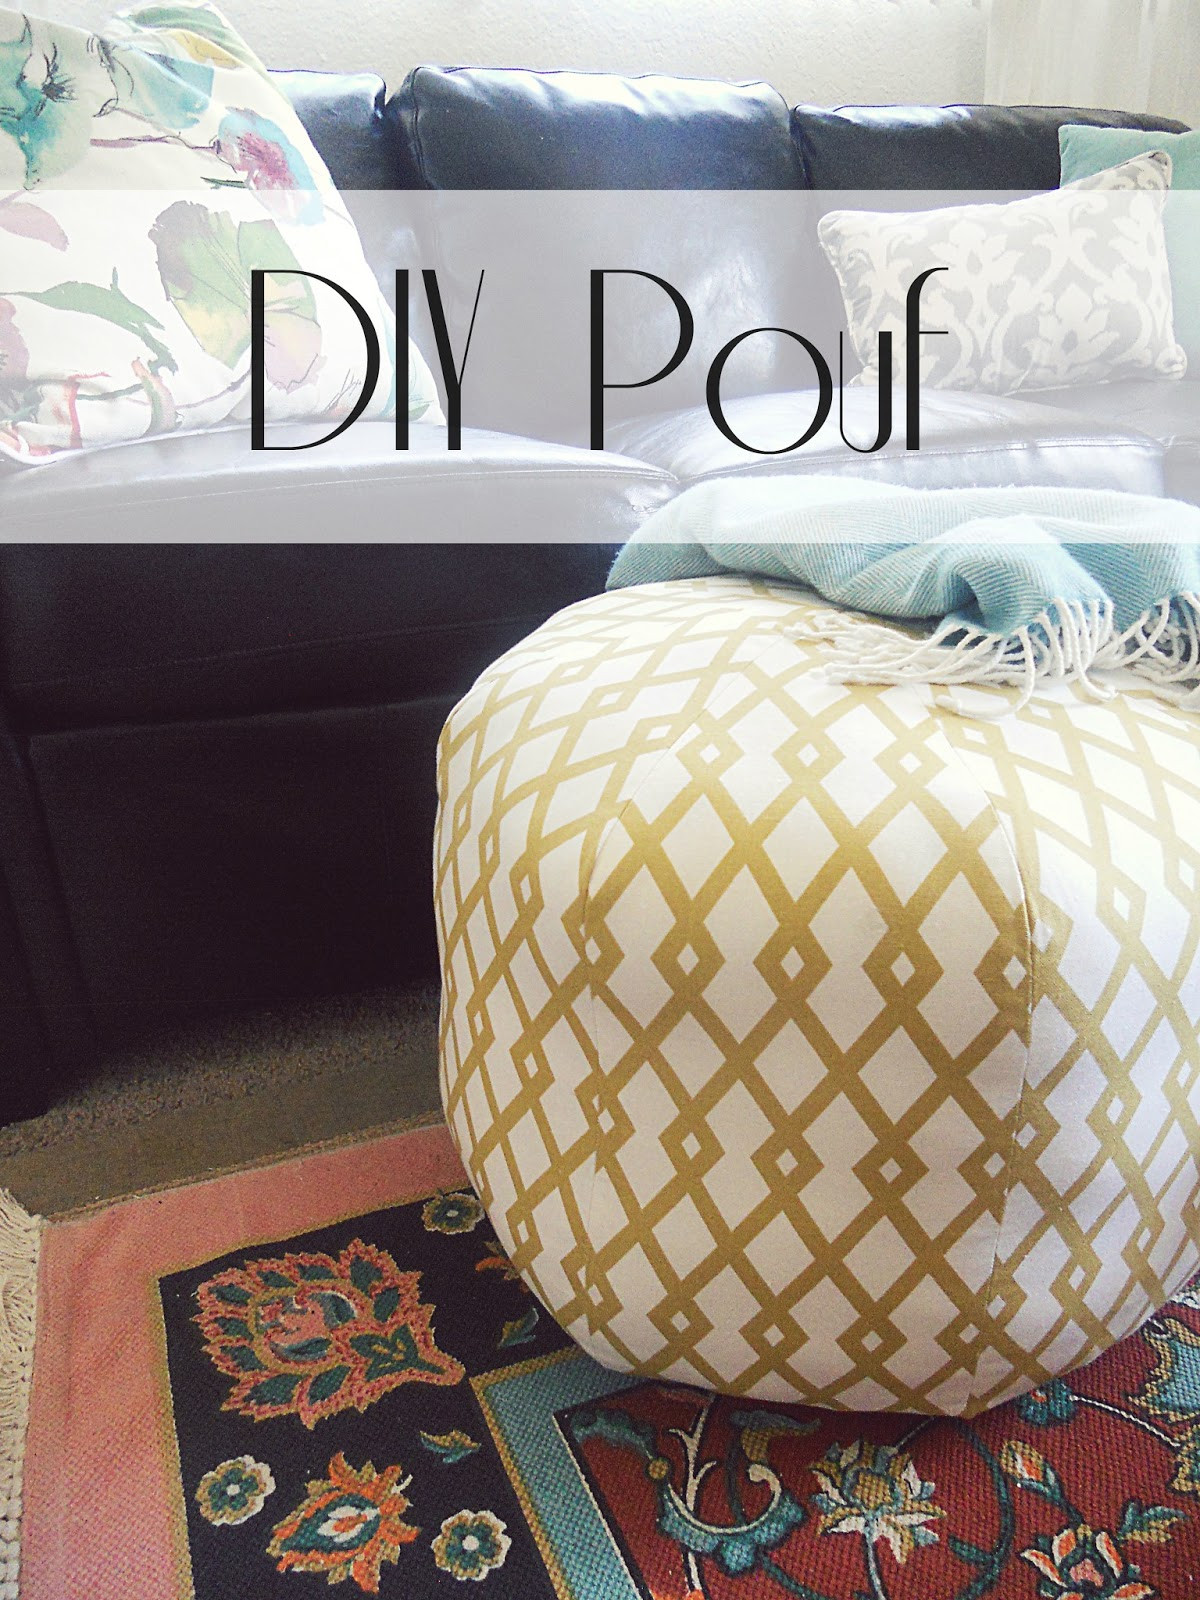 Best ideas about DIY Floor Pouf
. Save or Pin SL Designs DIY Floor Pouf Now.